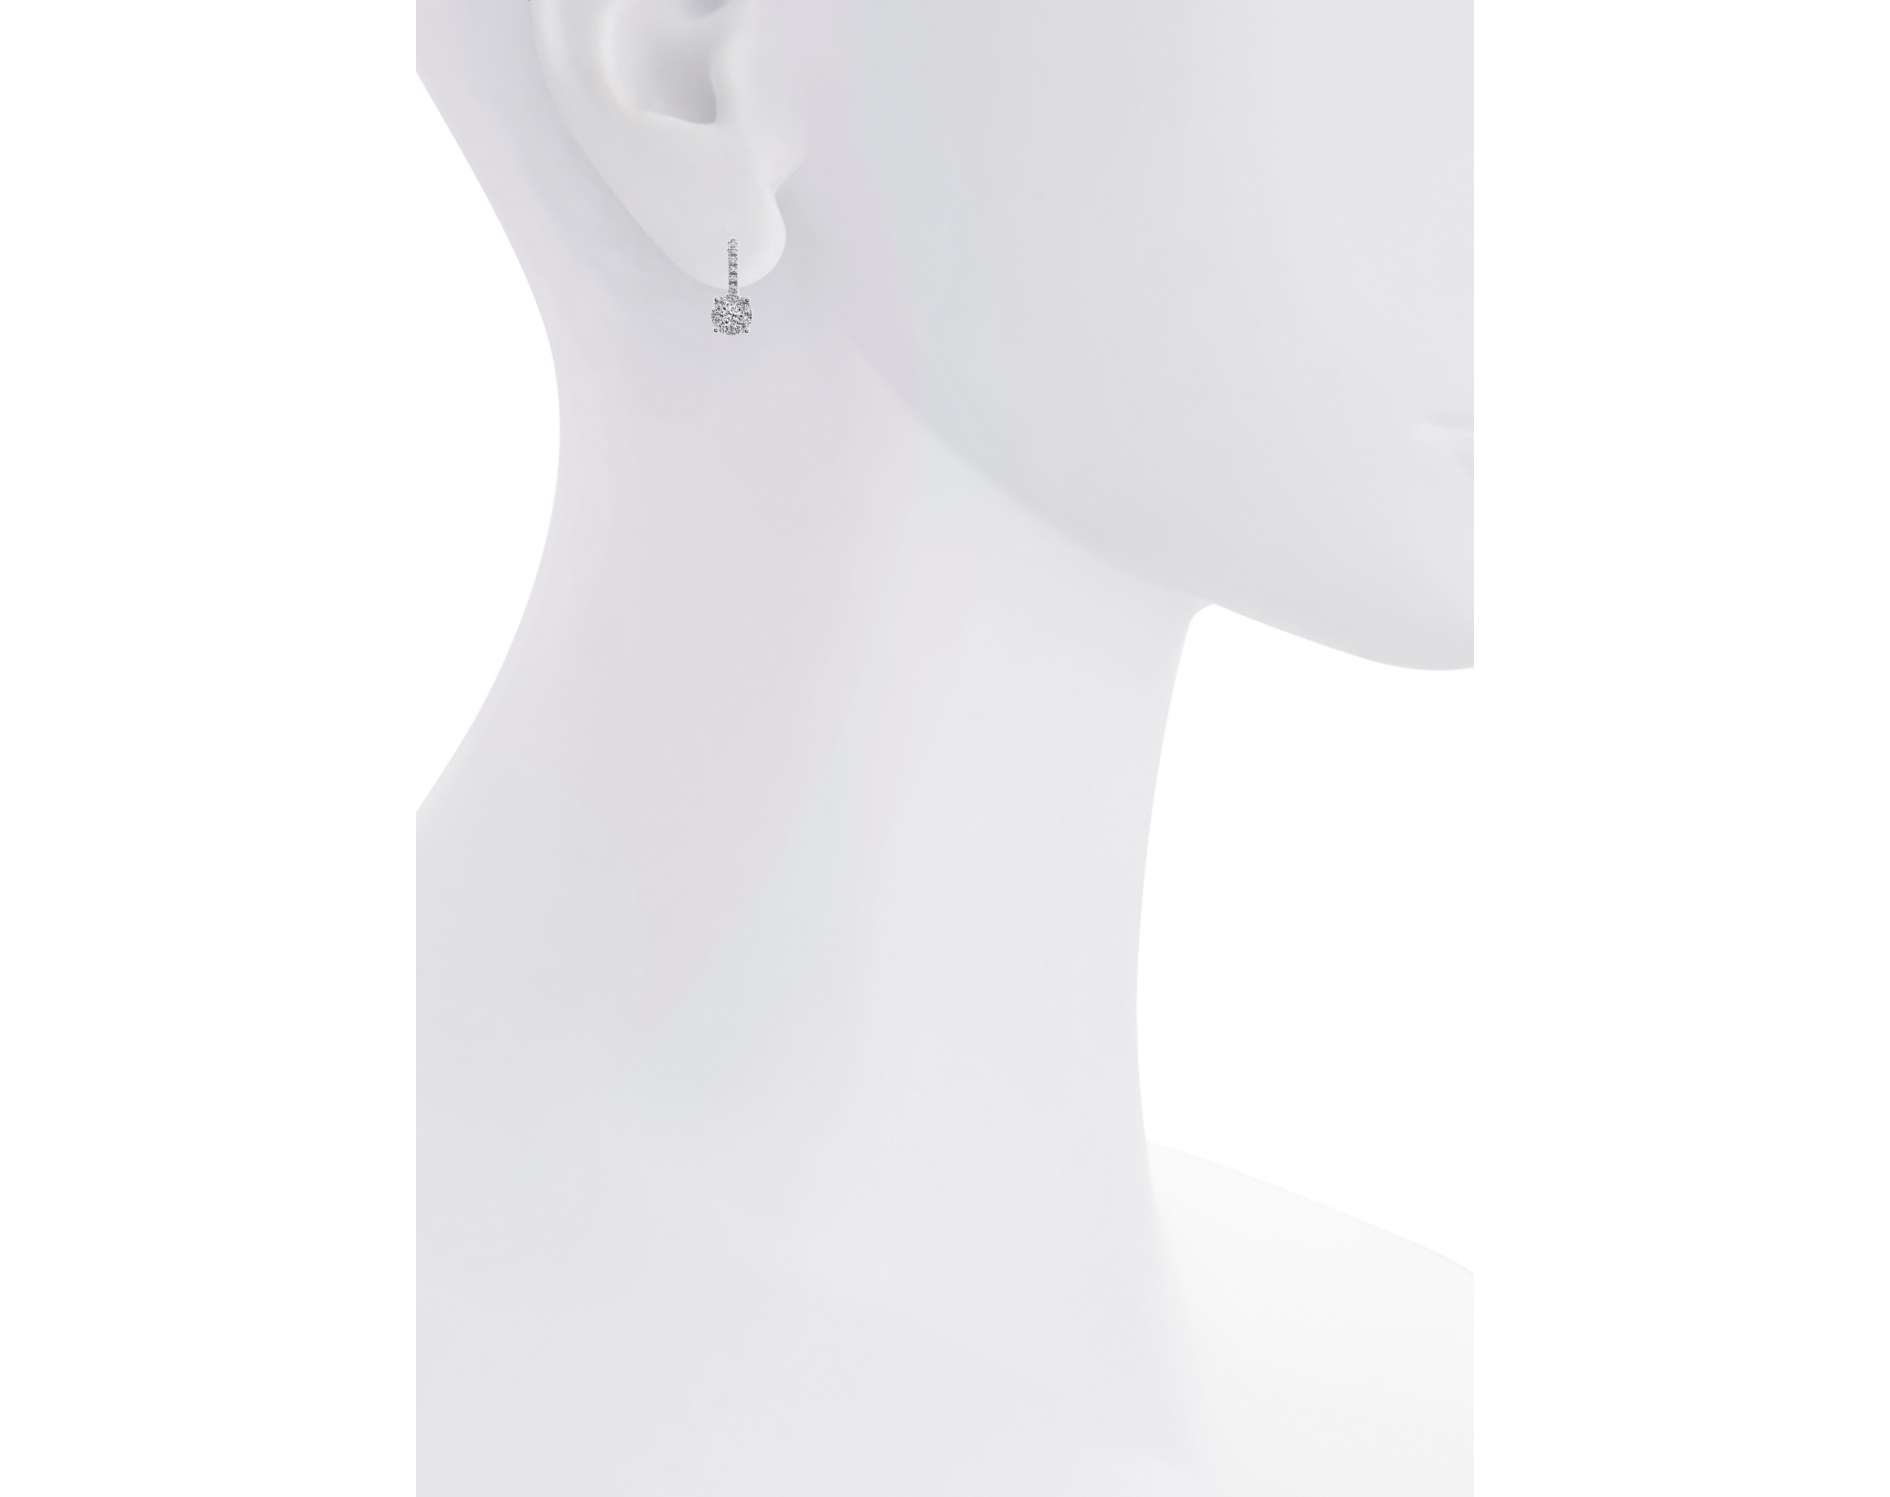 18k white gold halo illusion set diamond earrings with upstones